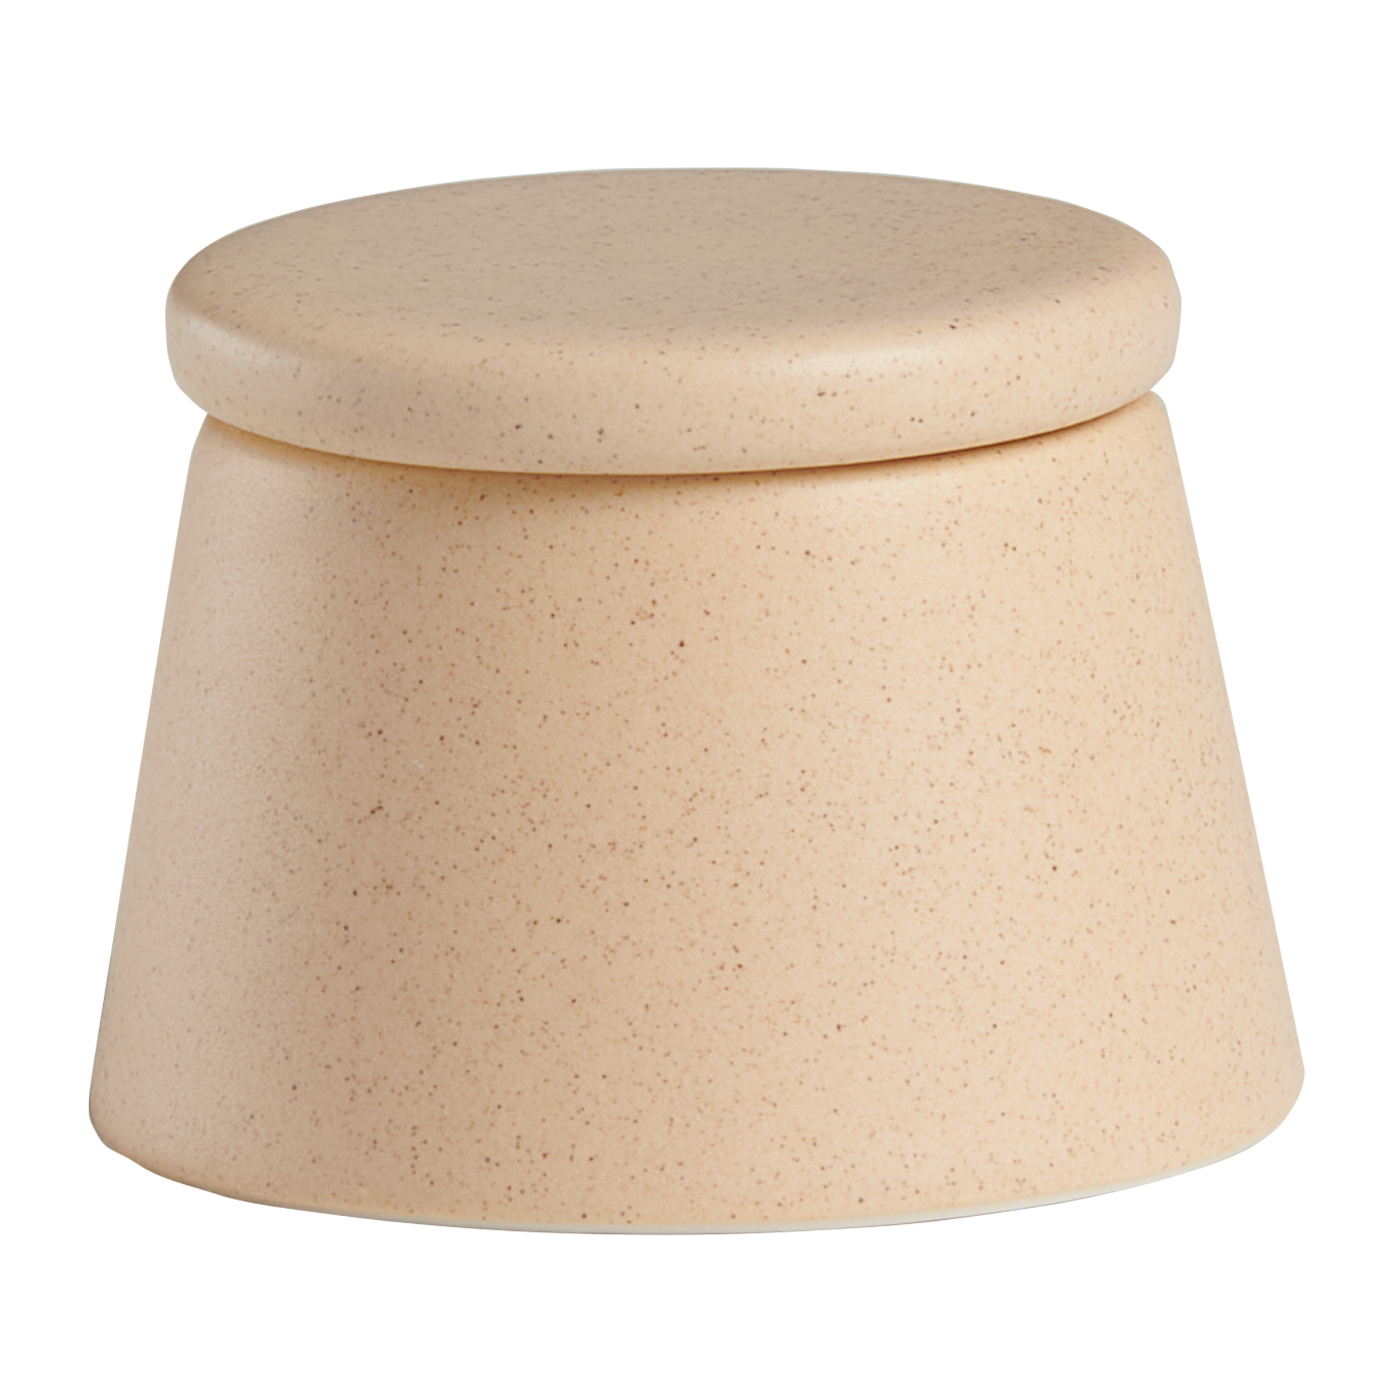 Ceramic Jar with Lid, 30 mL